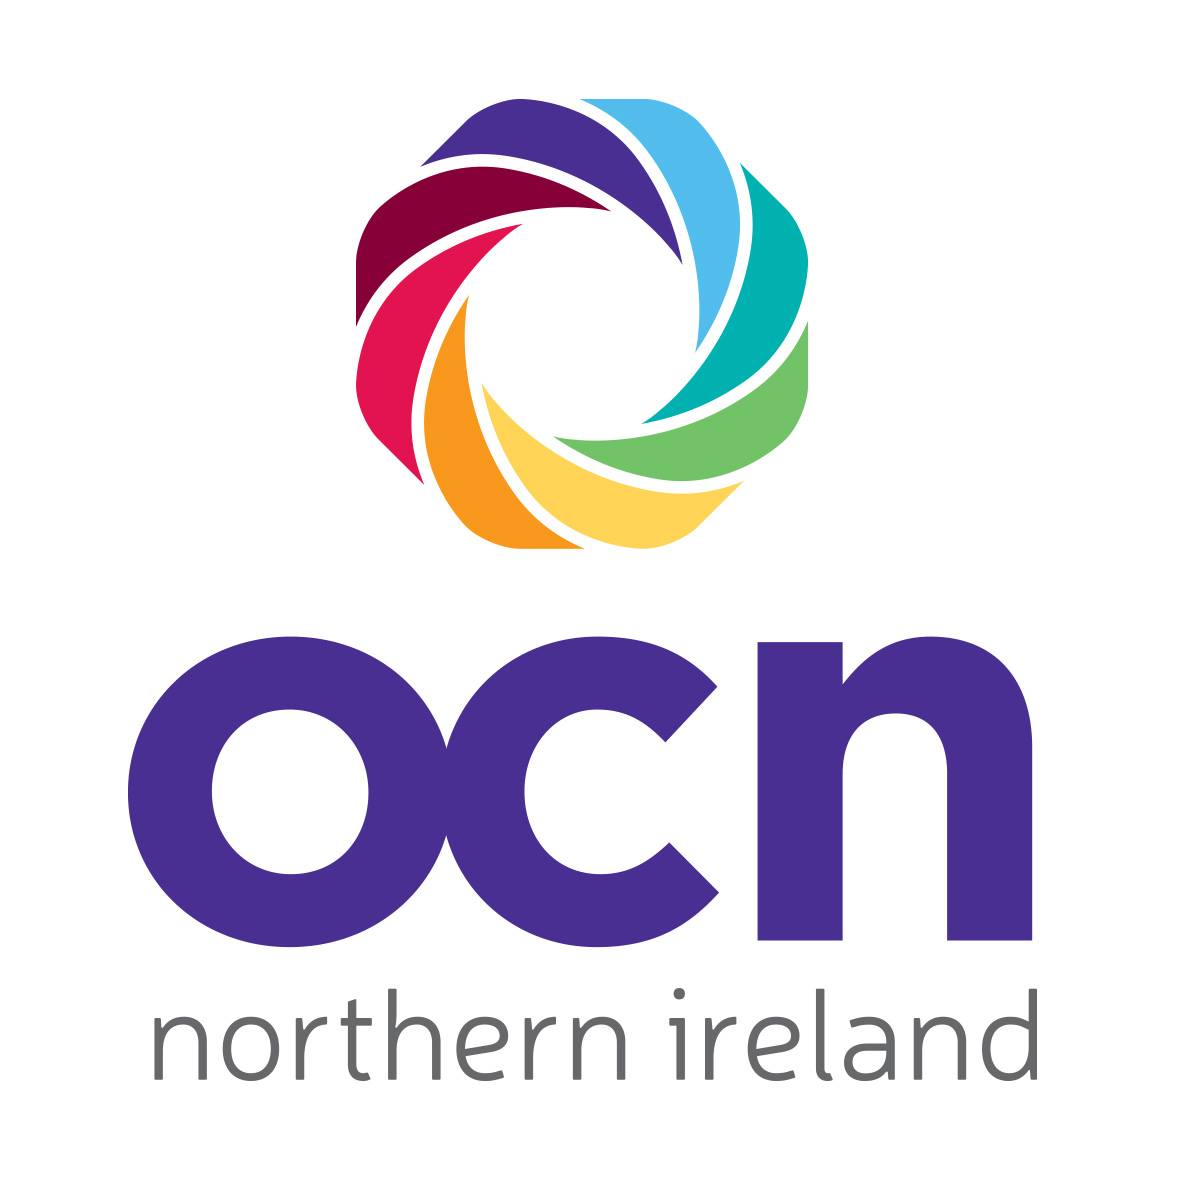 Open College Network Northern Ireland (OCN NI) Logo